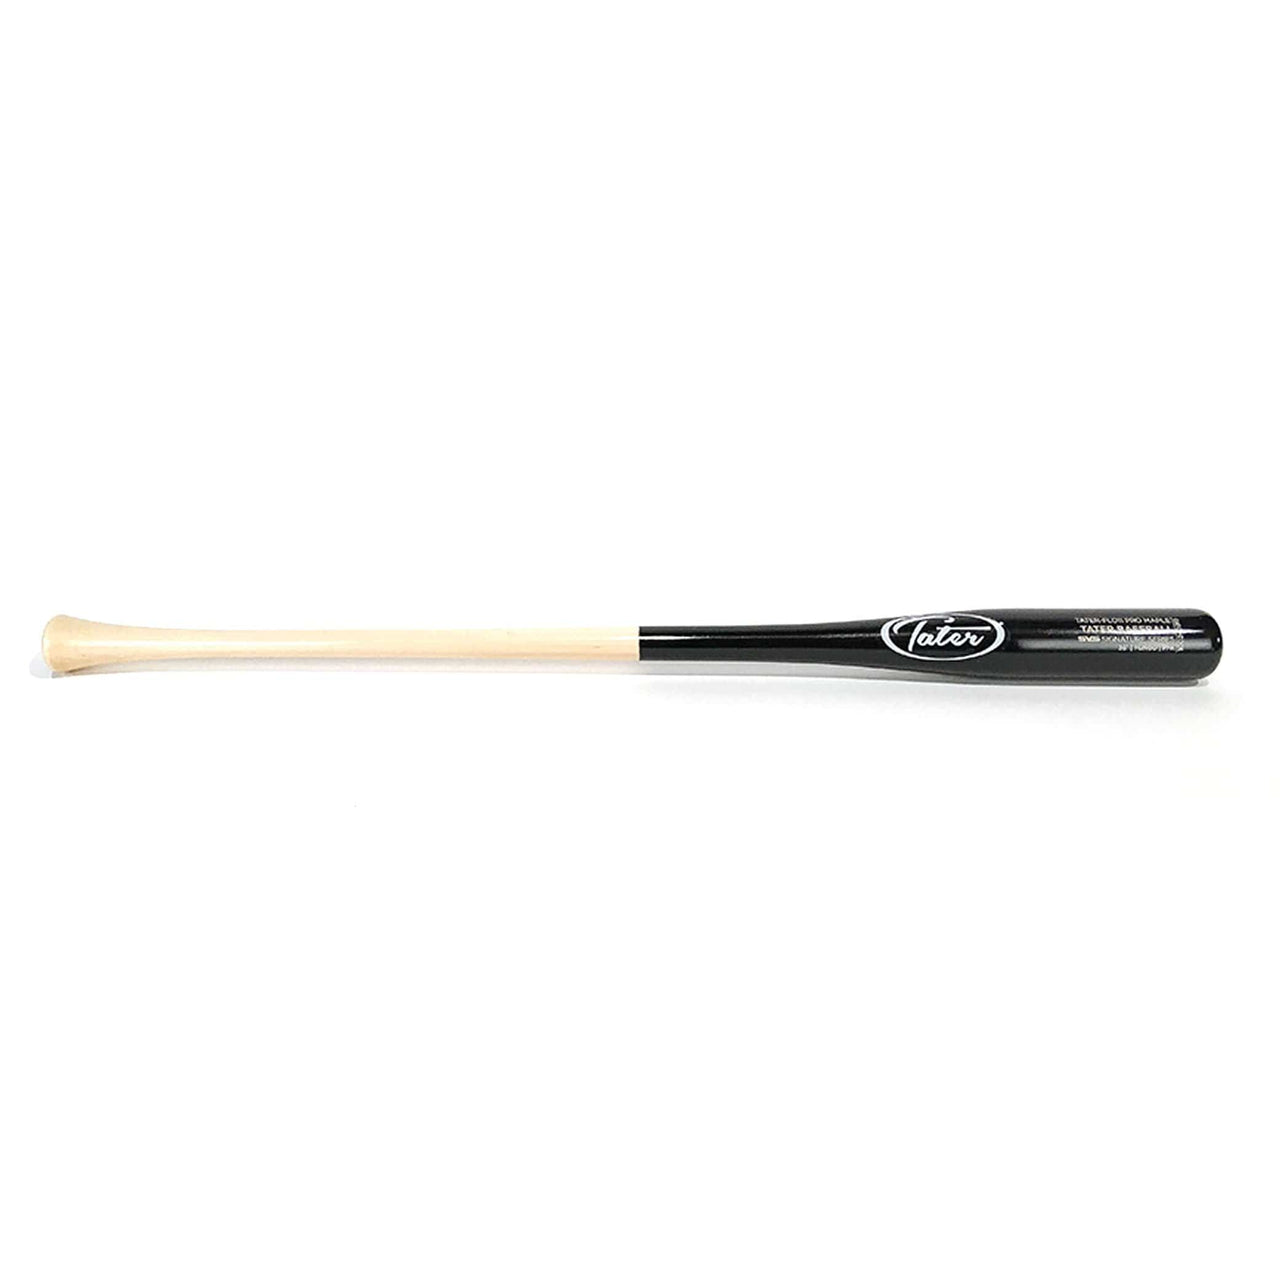 Fungo and Trainer Bats Tater Bats Tater FLO11 Fungo Wood Baseball Bat | Maple